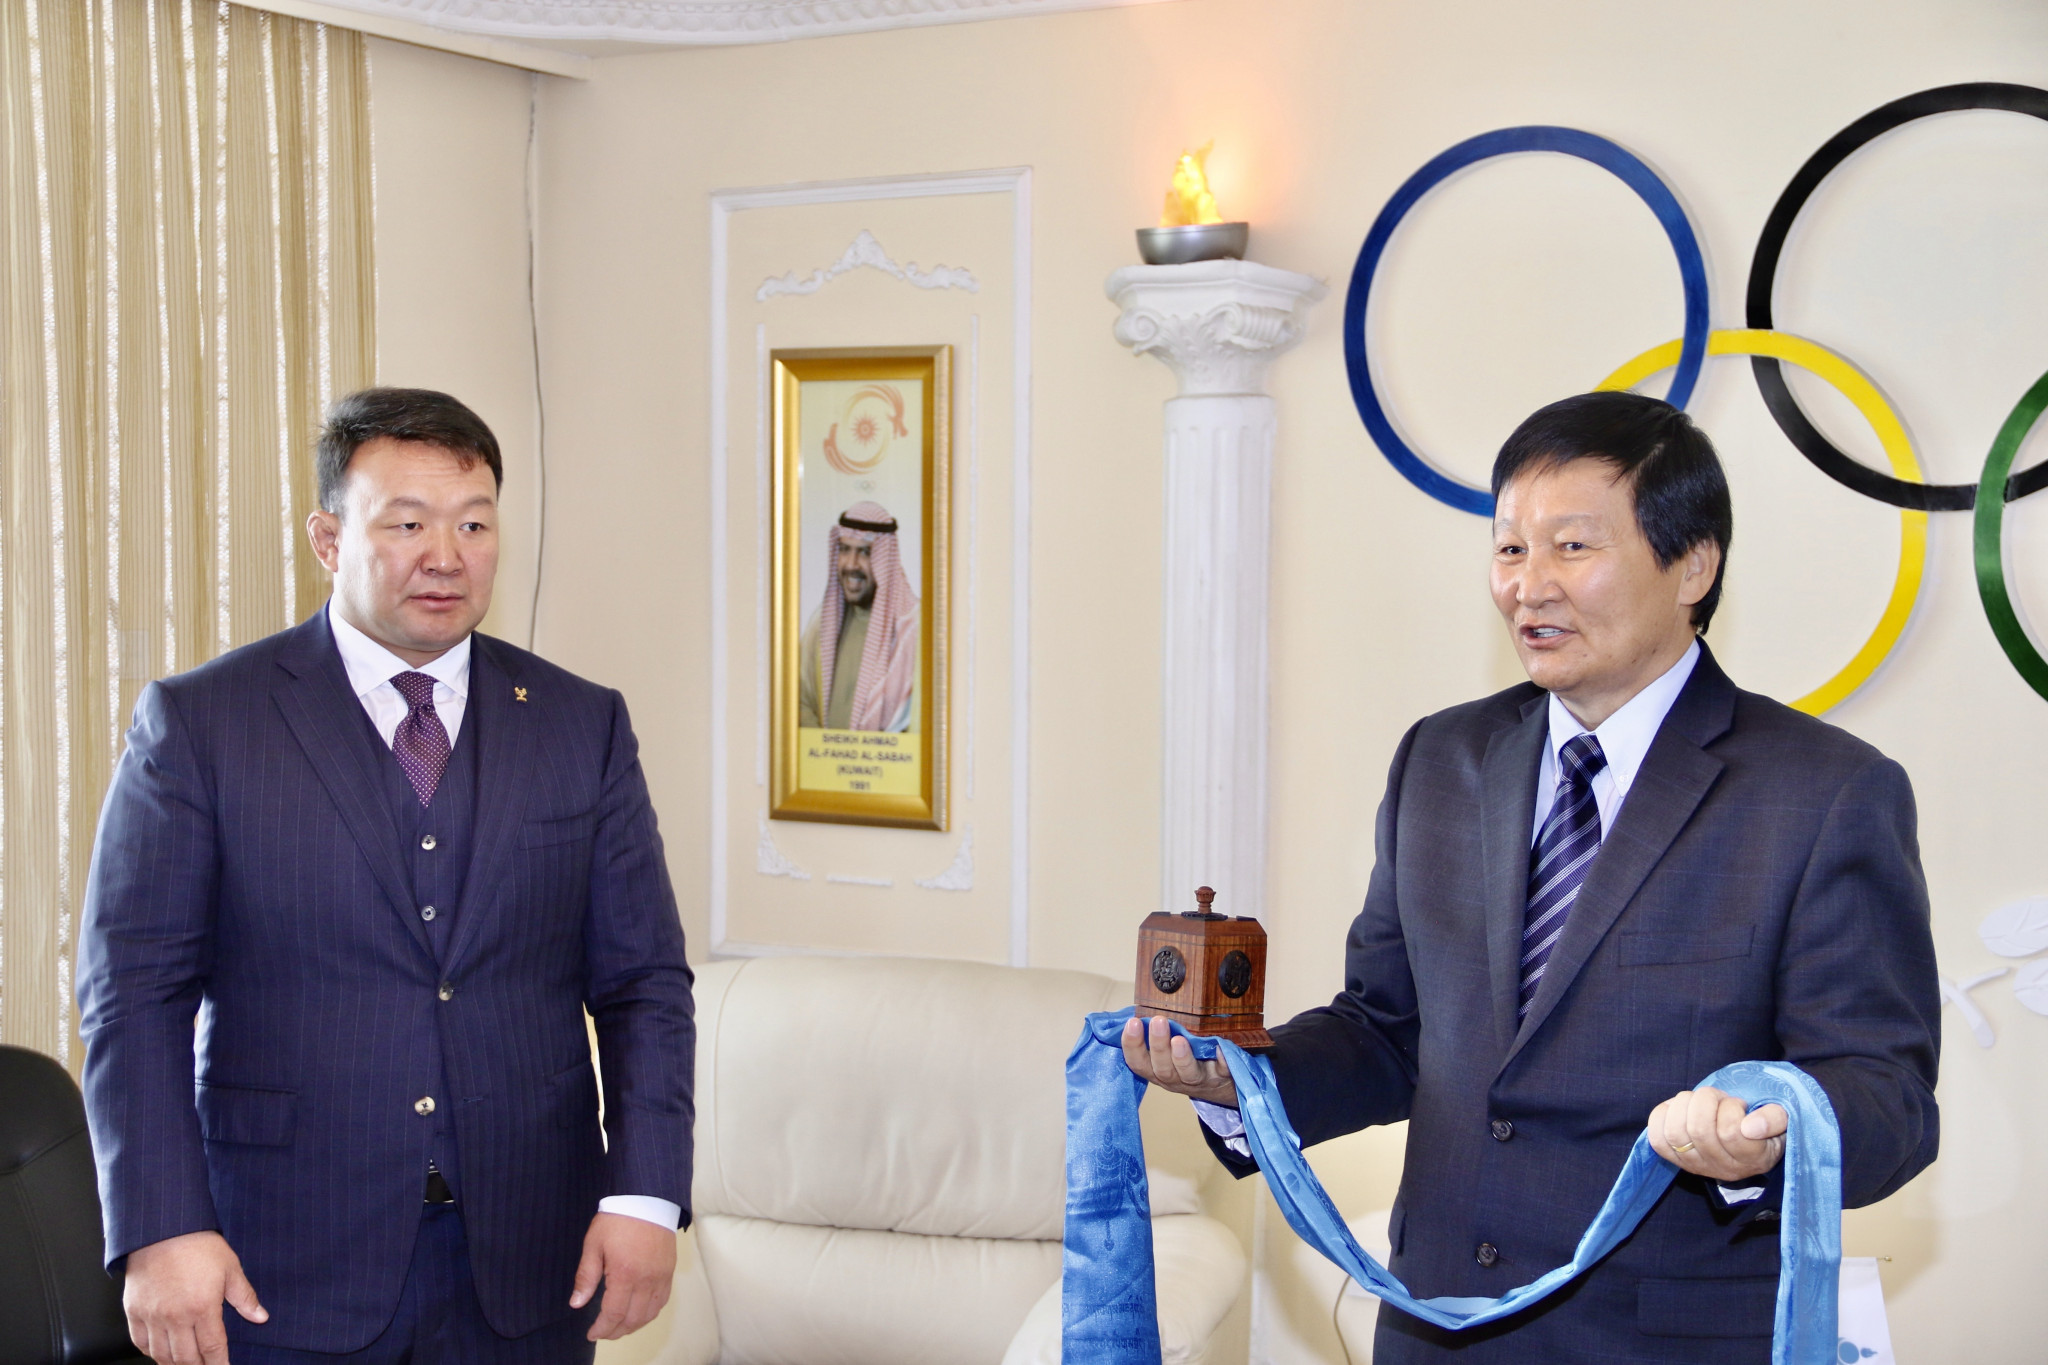 Demchigjav Zagdsuren, right, served as Mongolia NOC President for almost 20 years before being succeeded by Naidan Tuvshinbayar ©MNOC